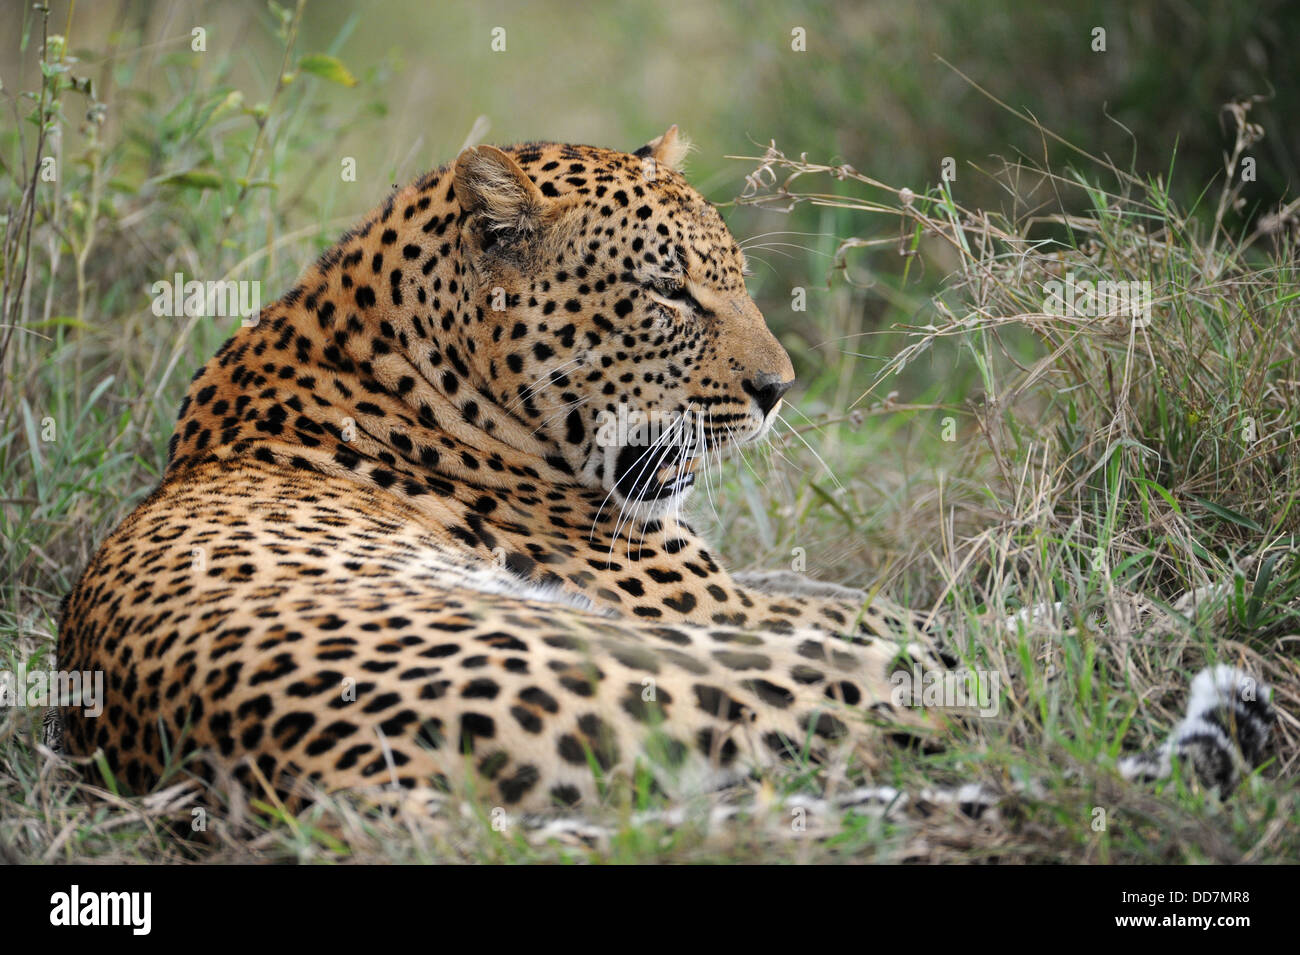 Maschio di leopard giacente in erba, la luce diurna Foto Stock